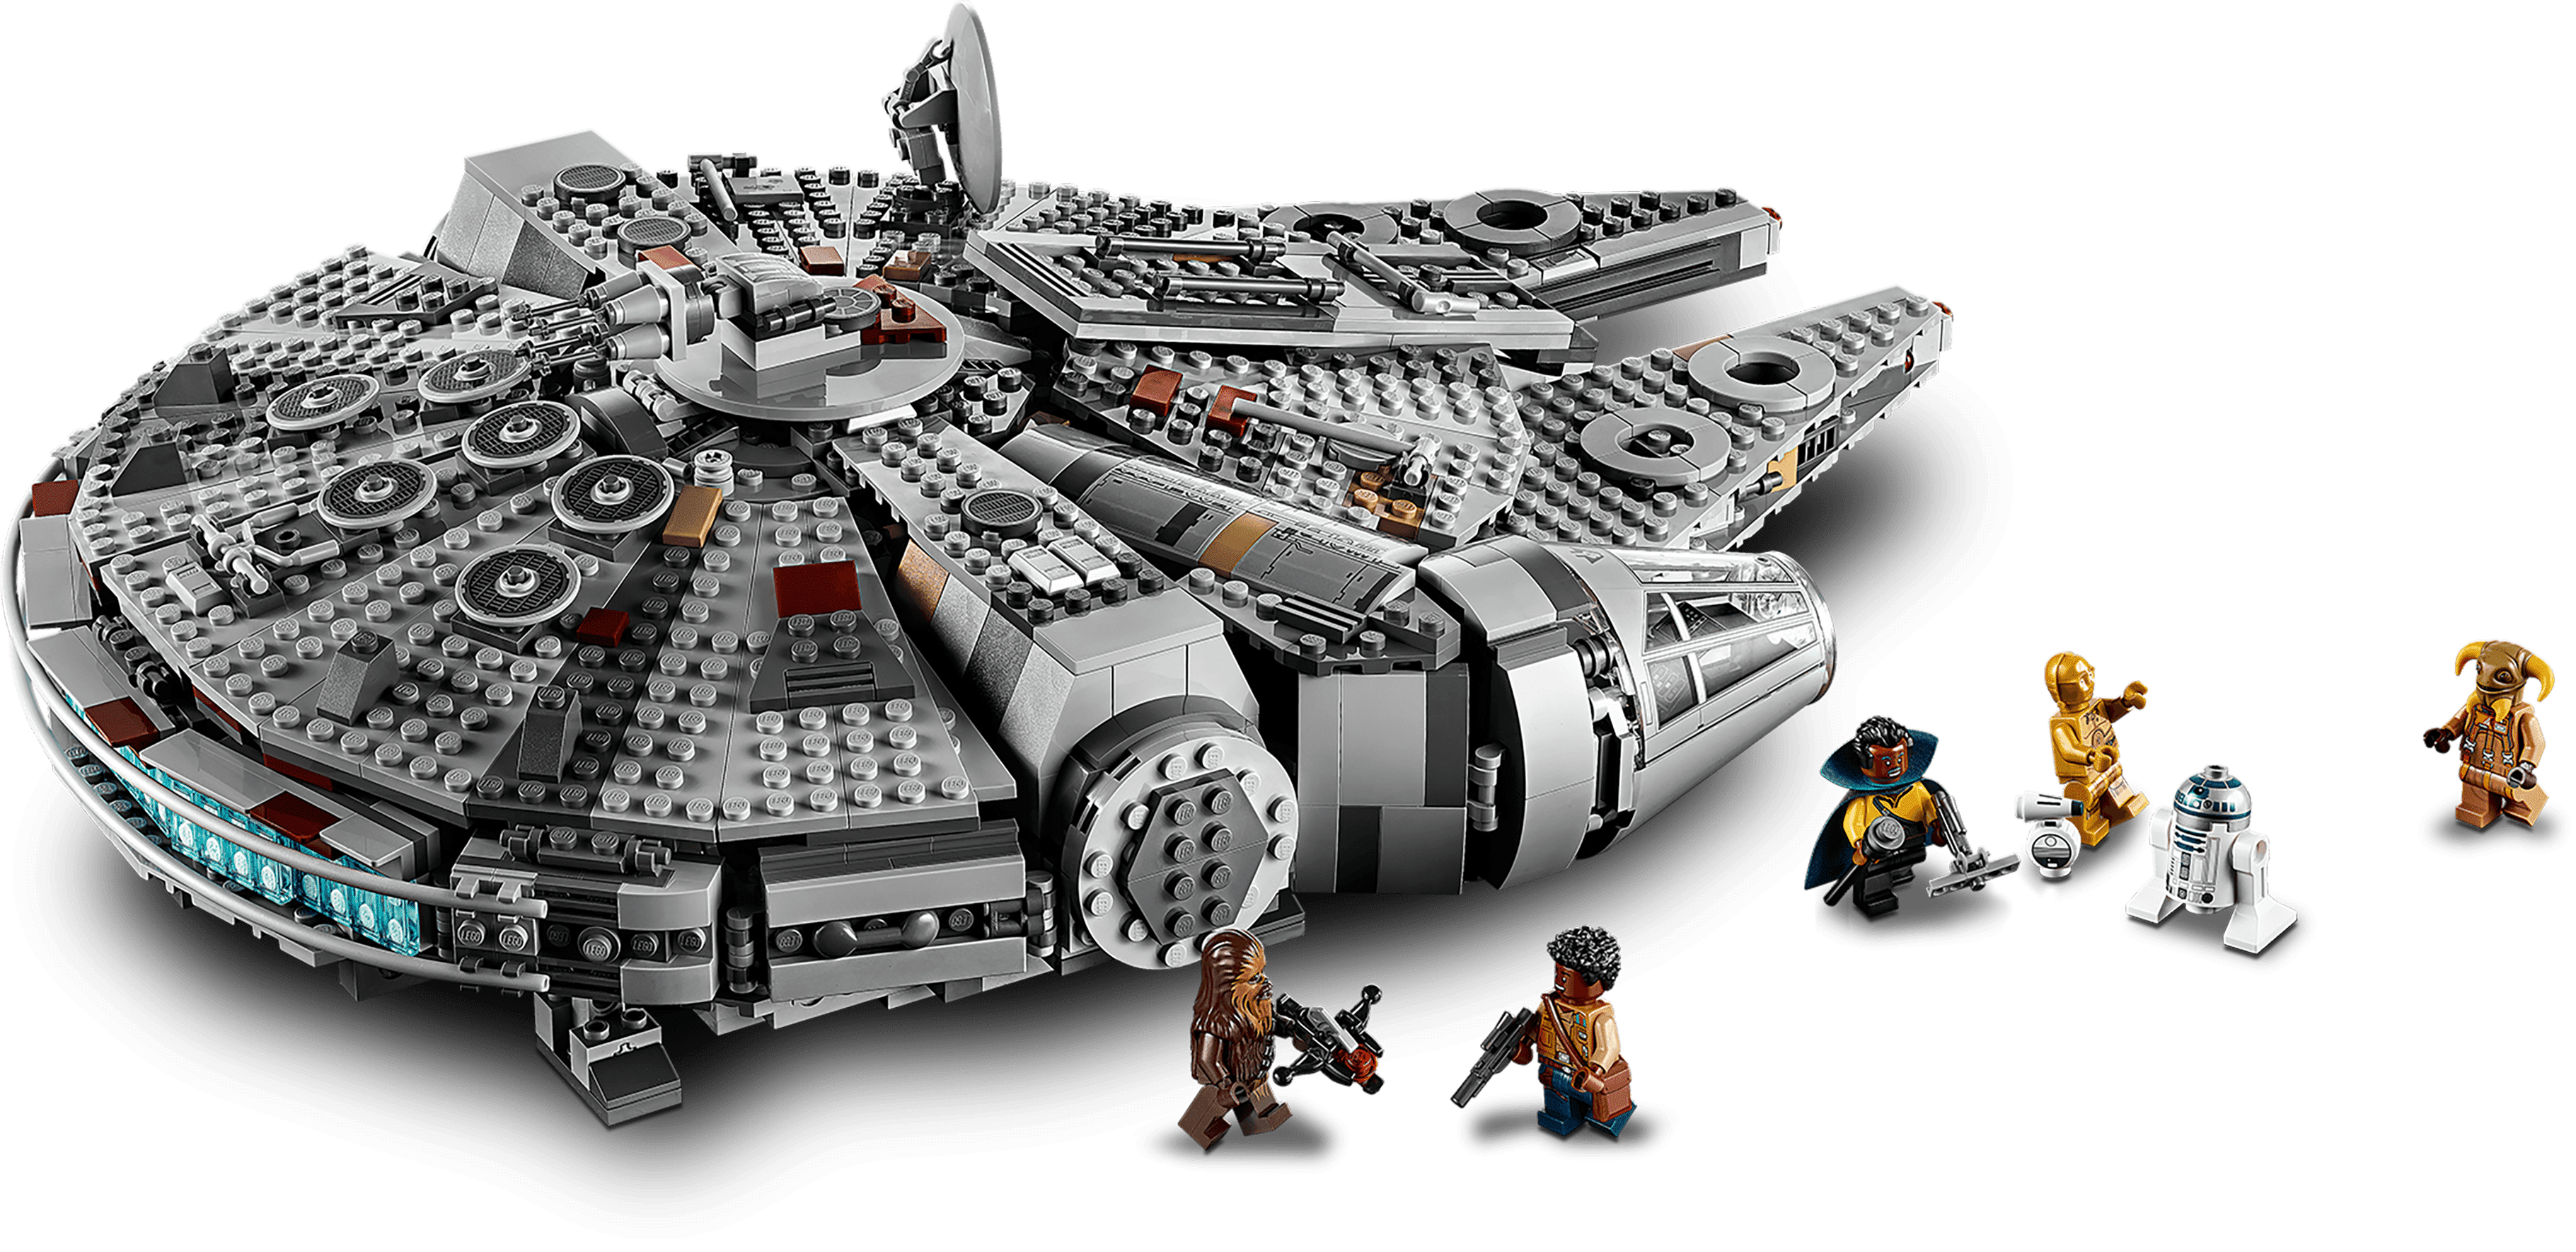 LEGO Star Wars Millennium Falcon 75257 Building Set - Starship 